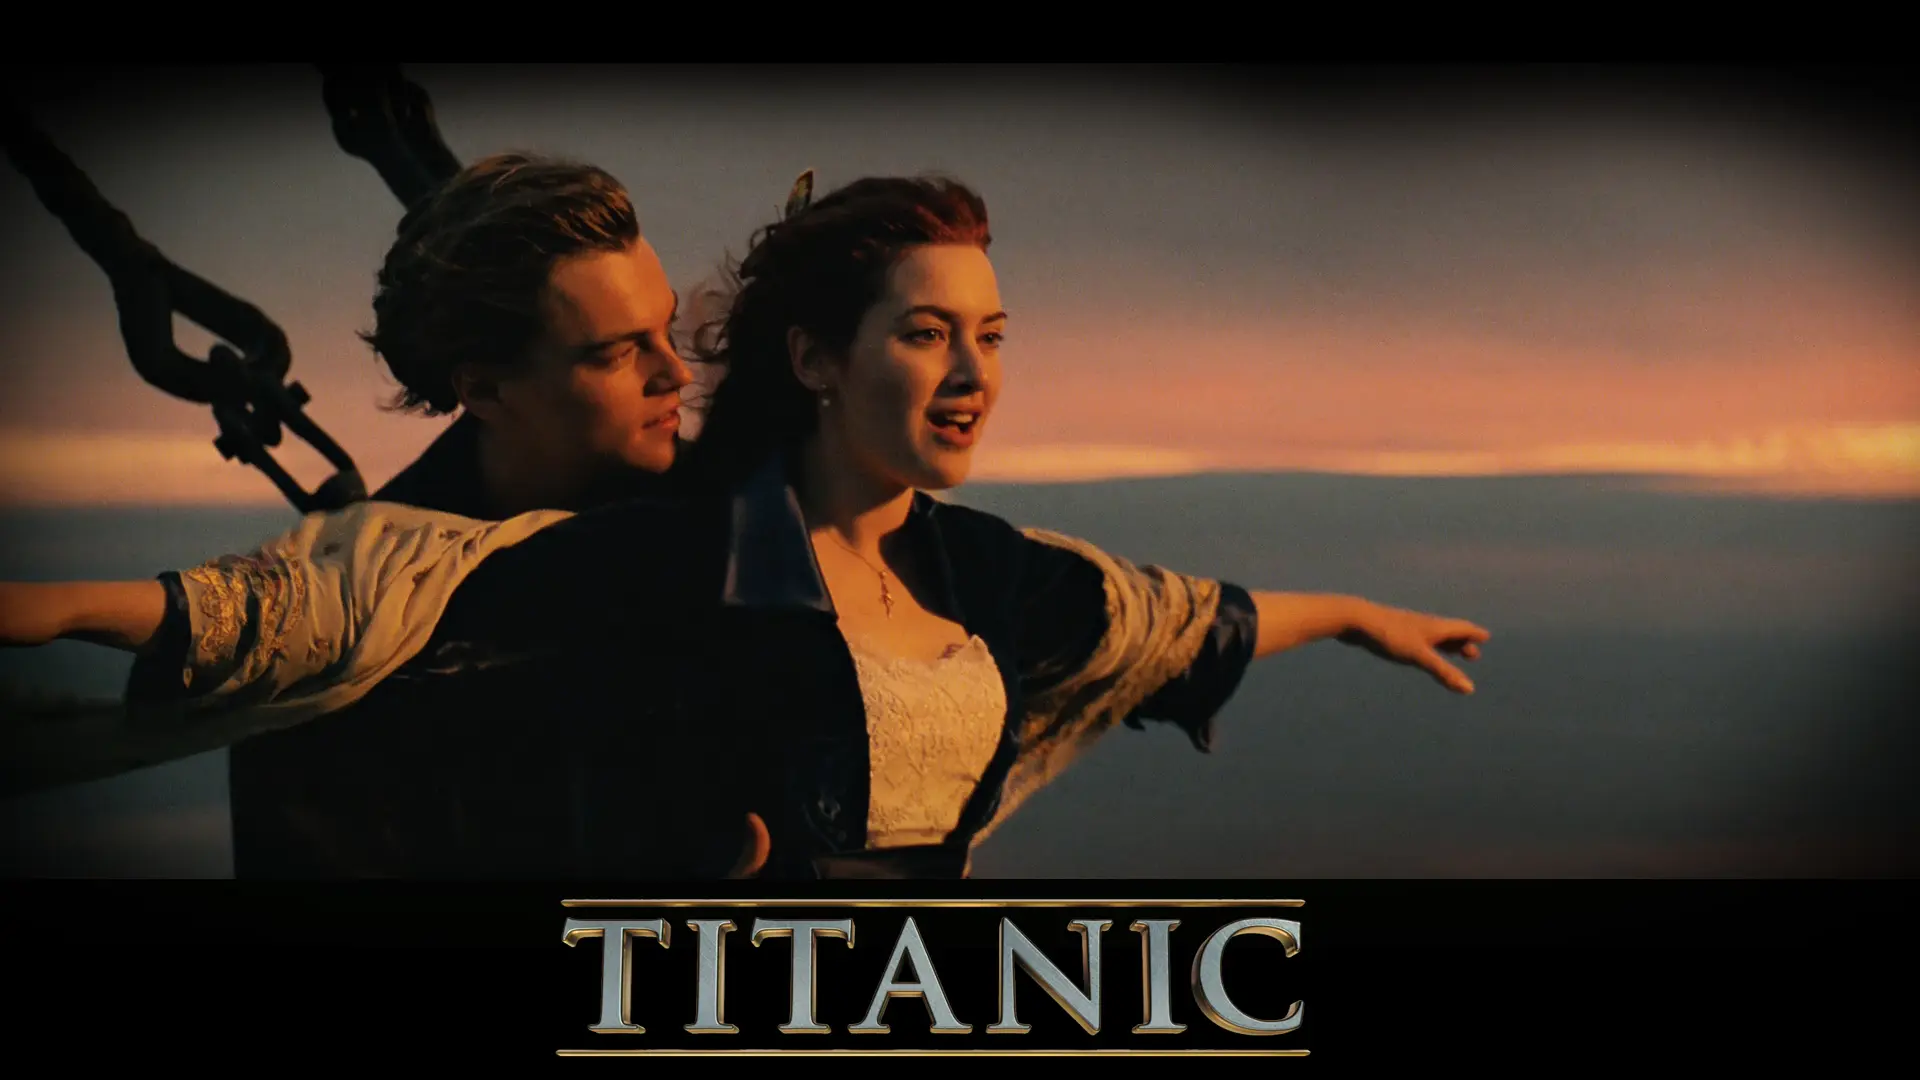 Movie Titanic 3D wallpaper 8 | Background Image